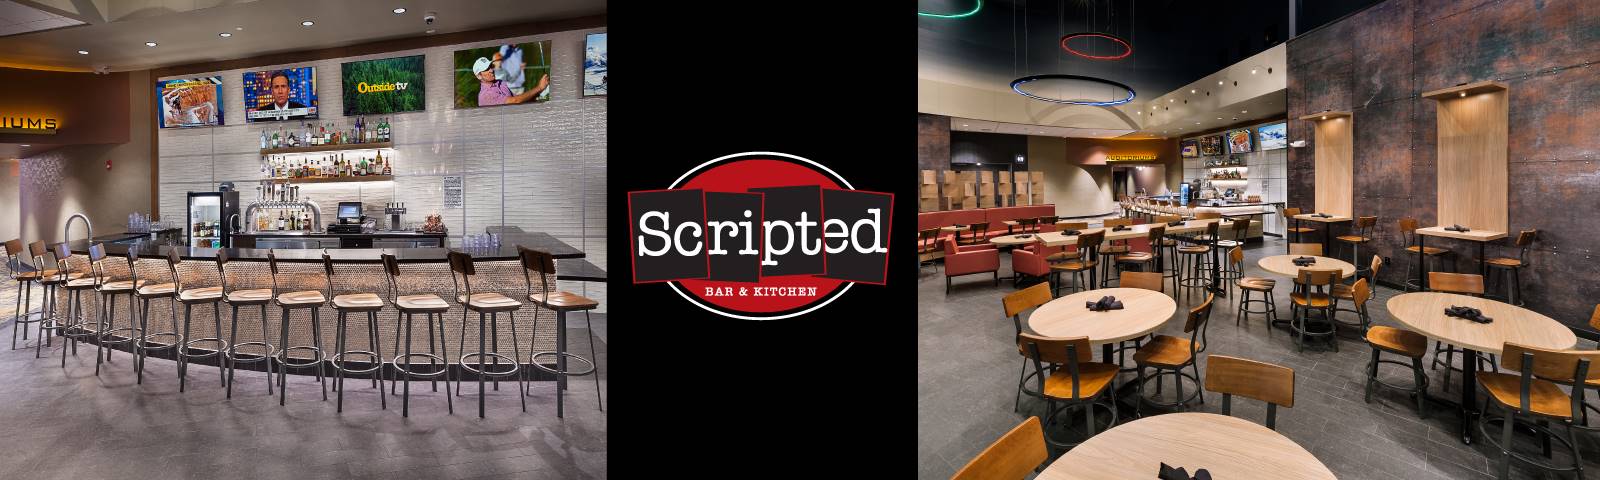 Scripted Bar & Kitchen